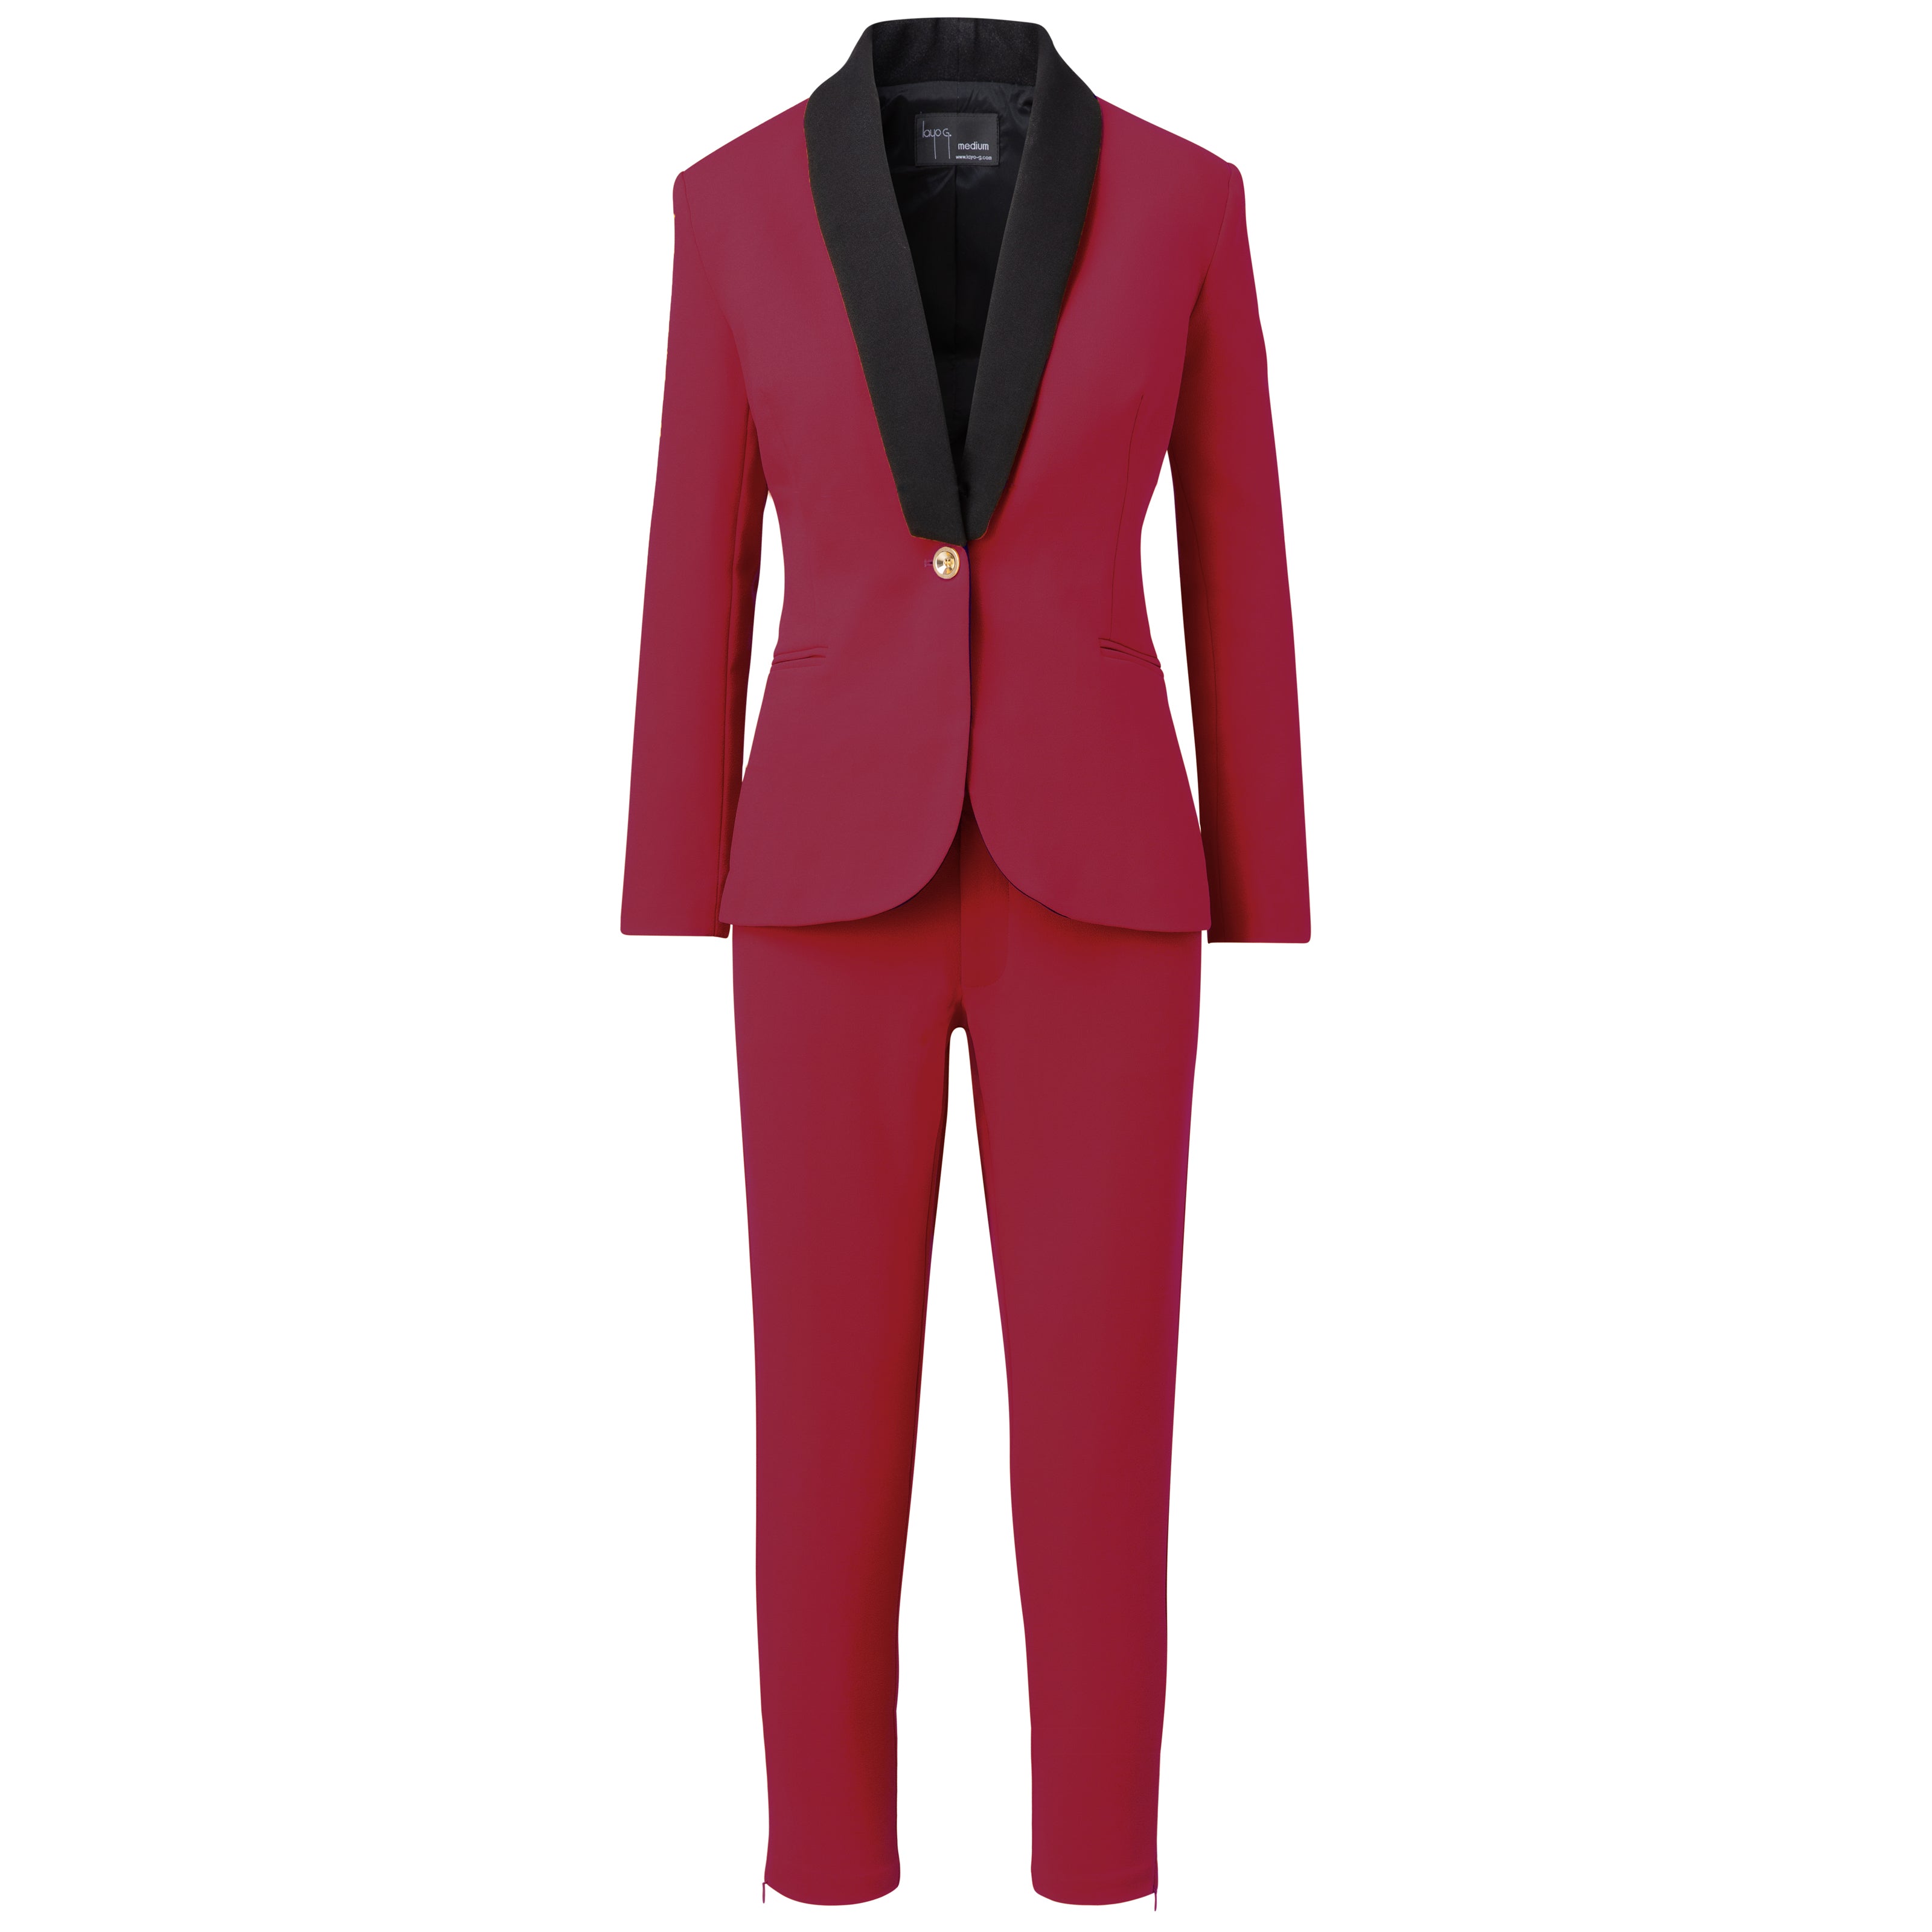 Women's Suits, A Bad Ass Fuchsia Suit